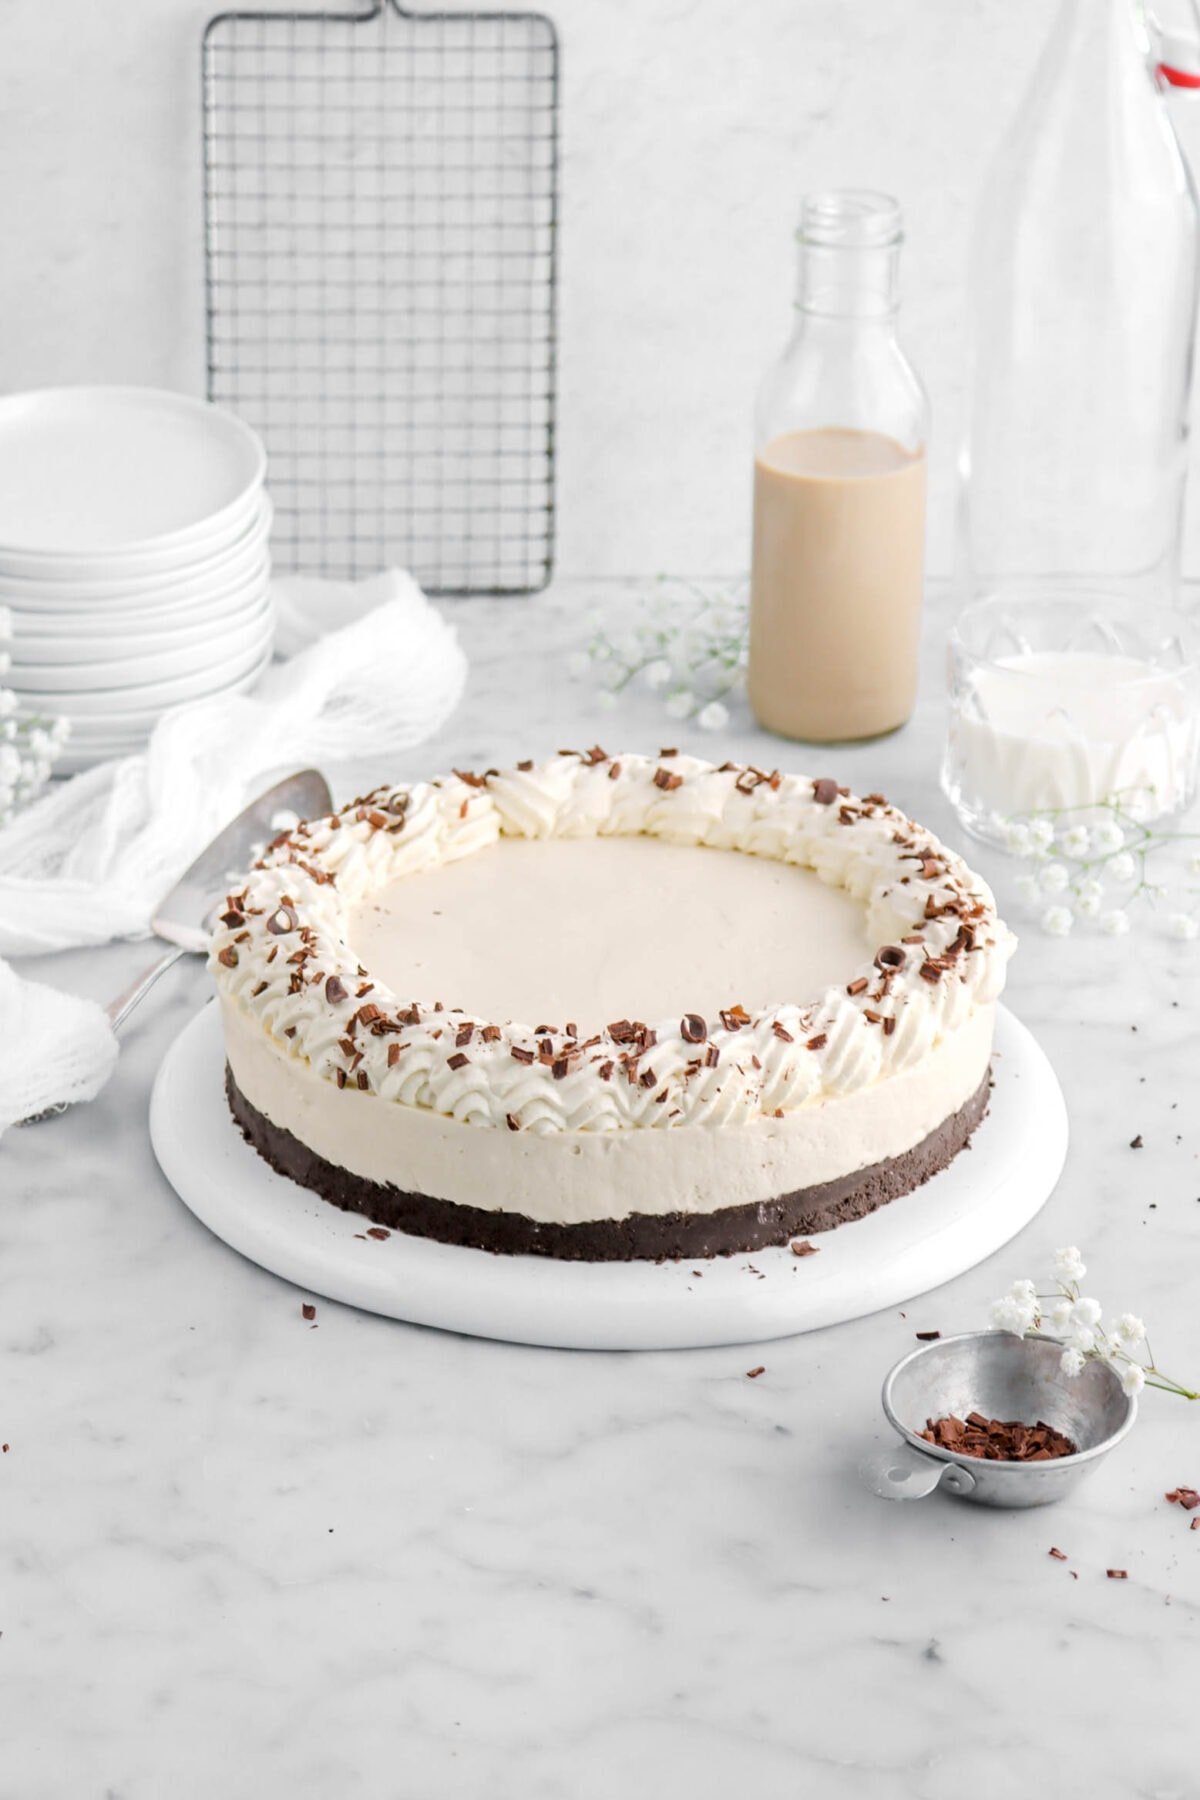 irish cream cheesecake on upside down plate with glass of milk and irish cream behind, stack of plates, and white flowers aorund.